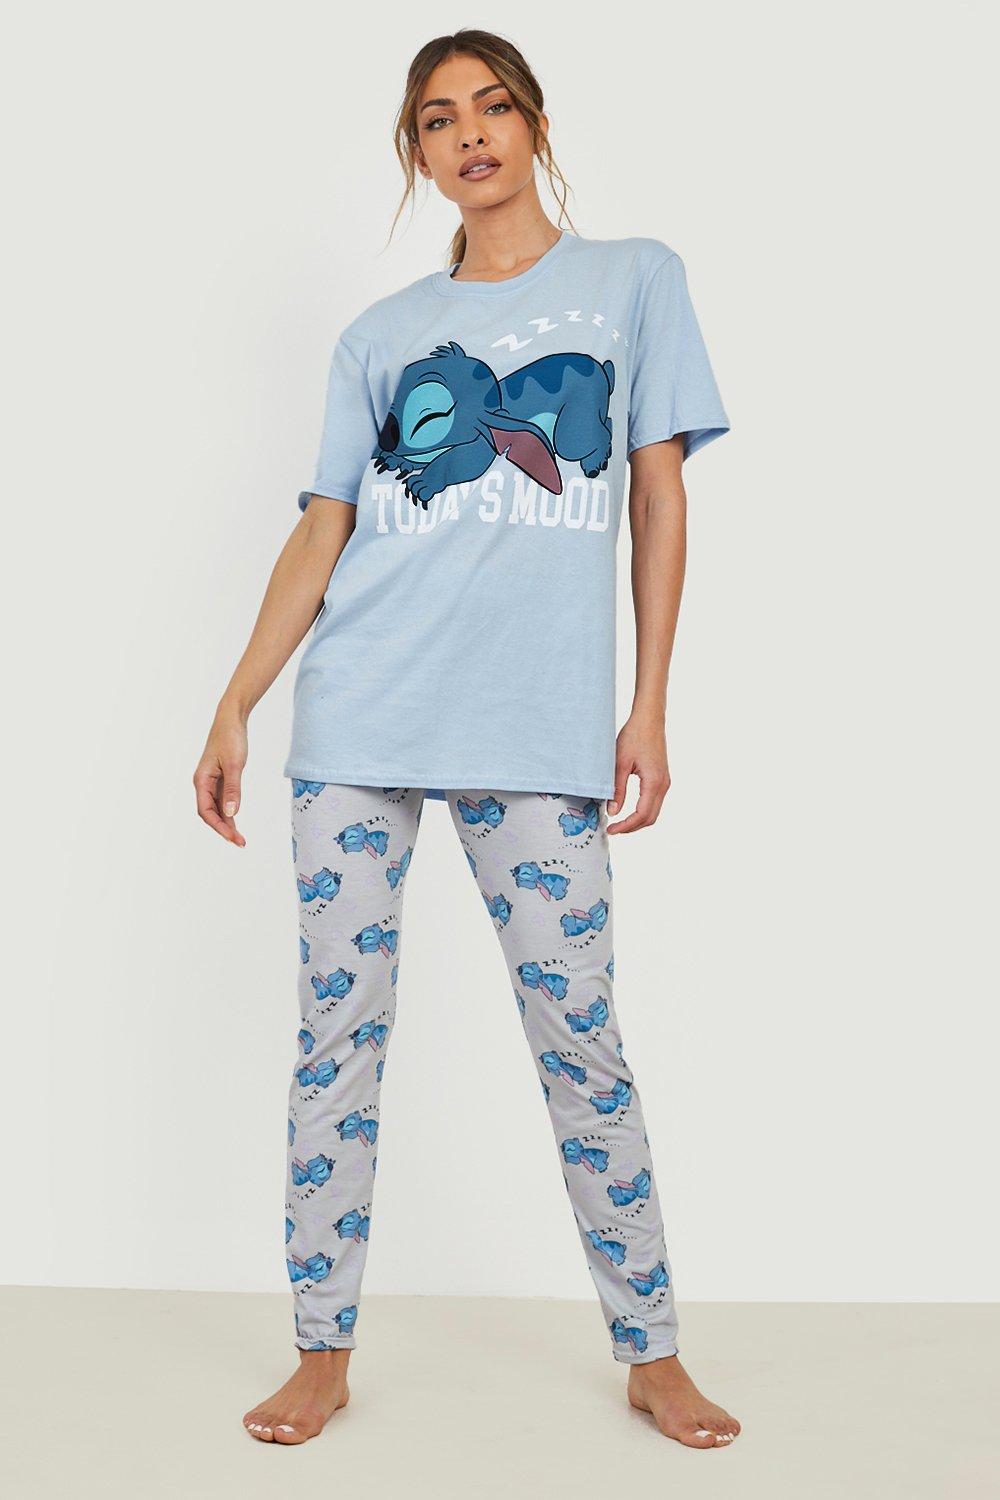 Pyjama lilo et stitch - Cdiscount